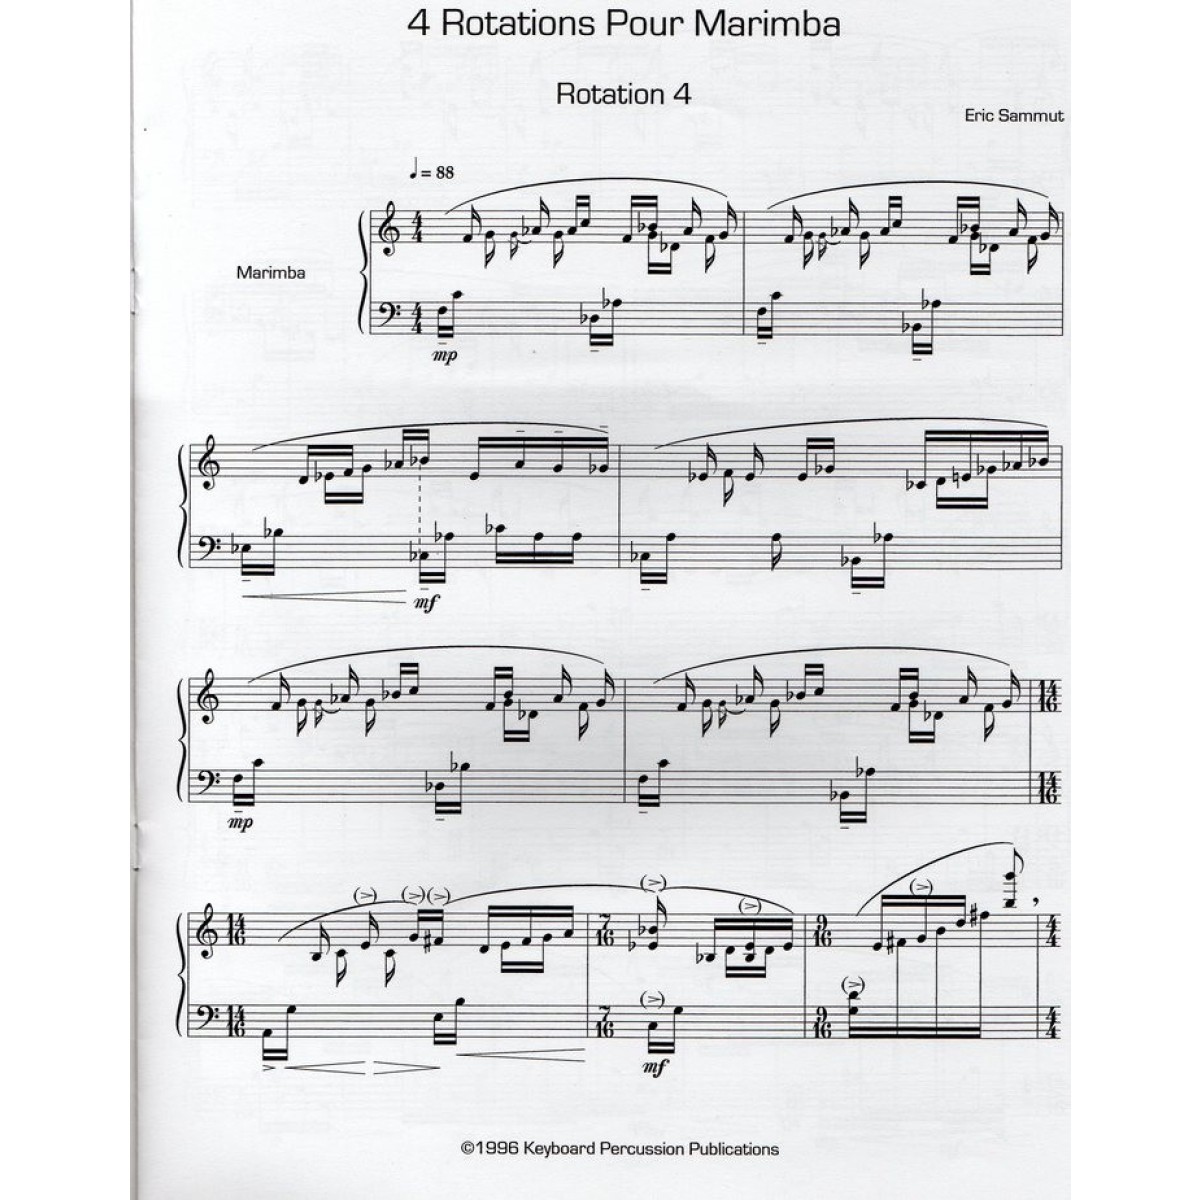 Four Rotations For Marimba IV by Eric Sammut